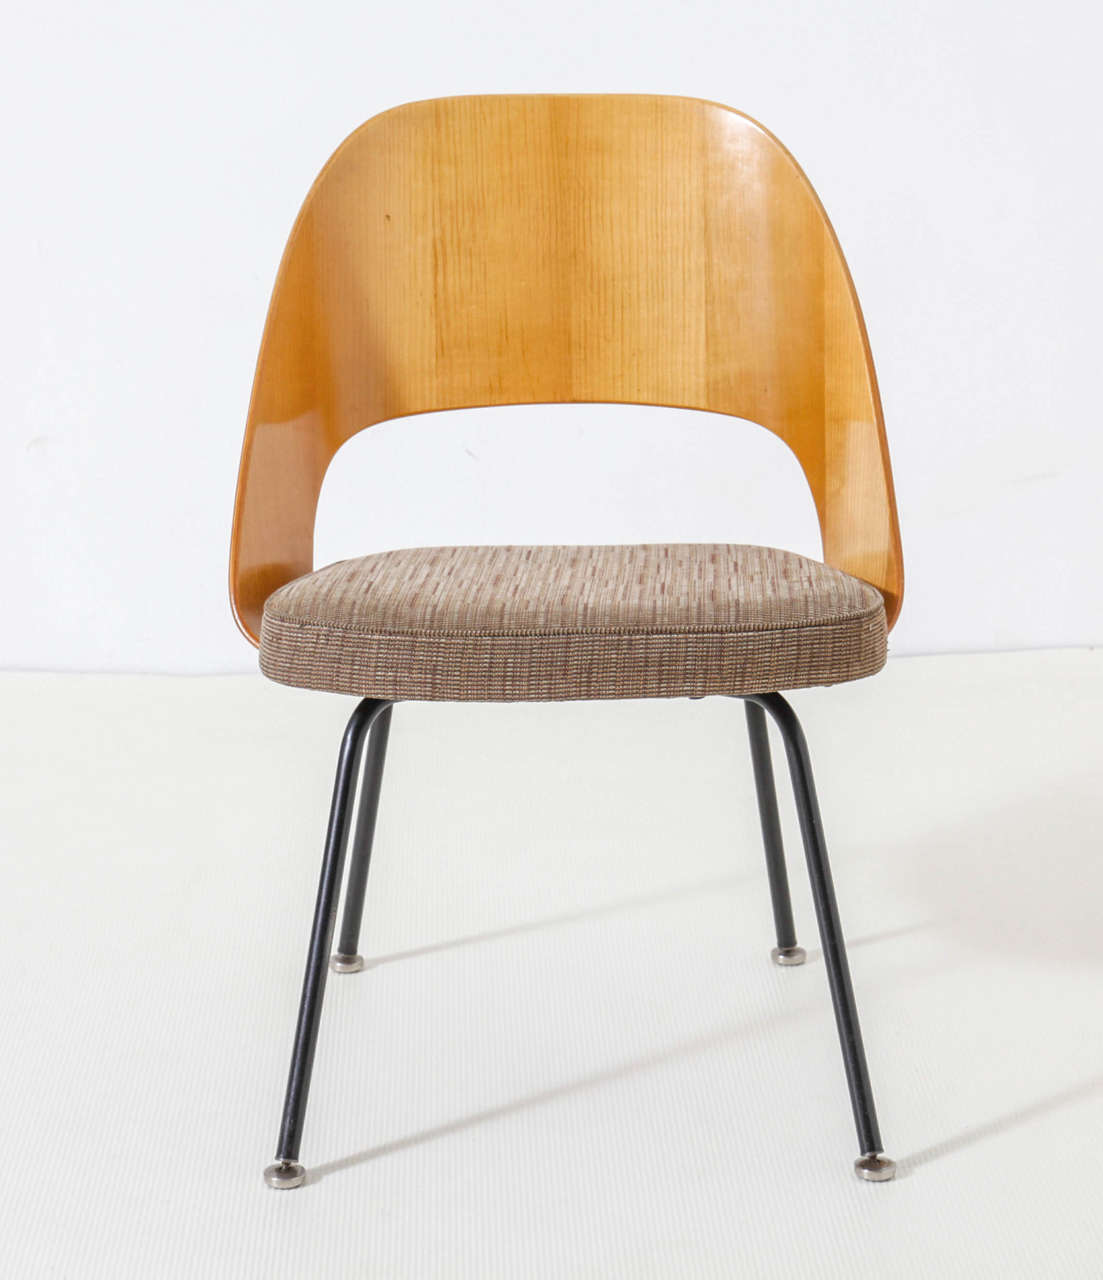 Eero Saarinen Chairs and Florence Knoll Table 2